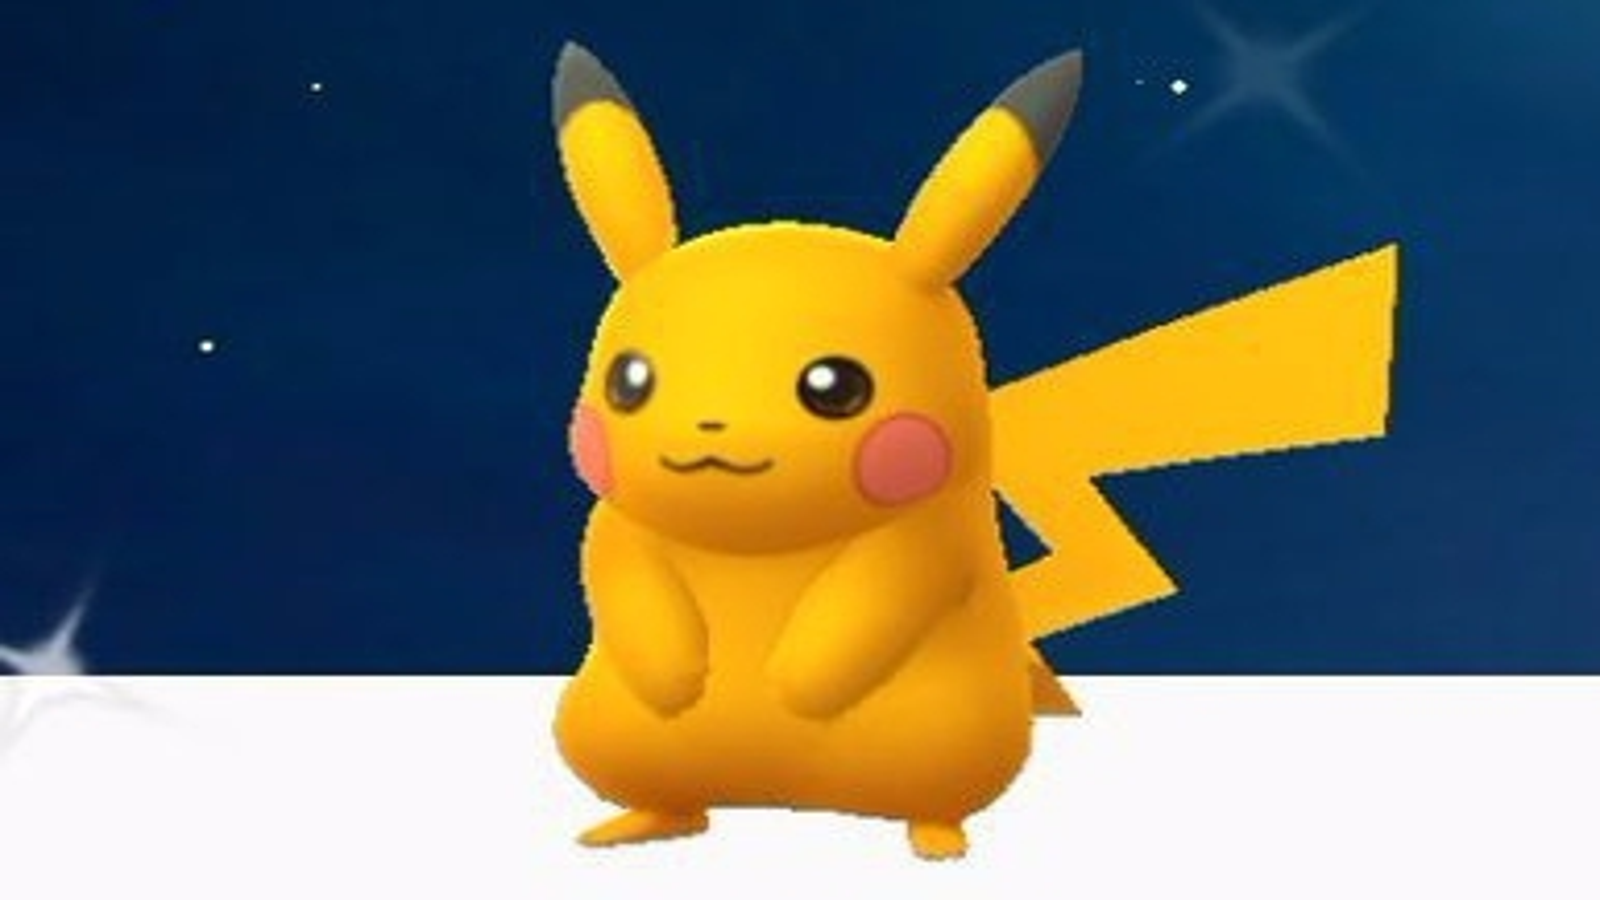 Shiny Pikachu Has Come To Pokemon GO Worldwide